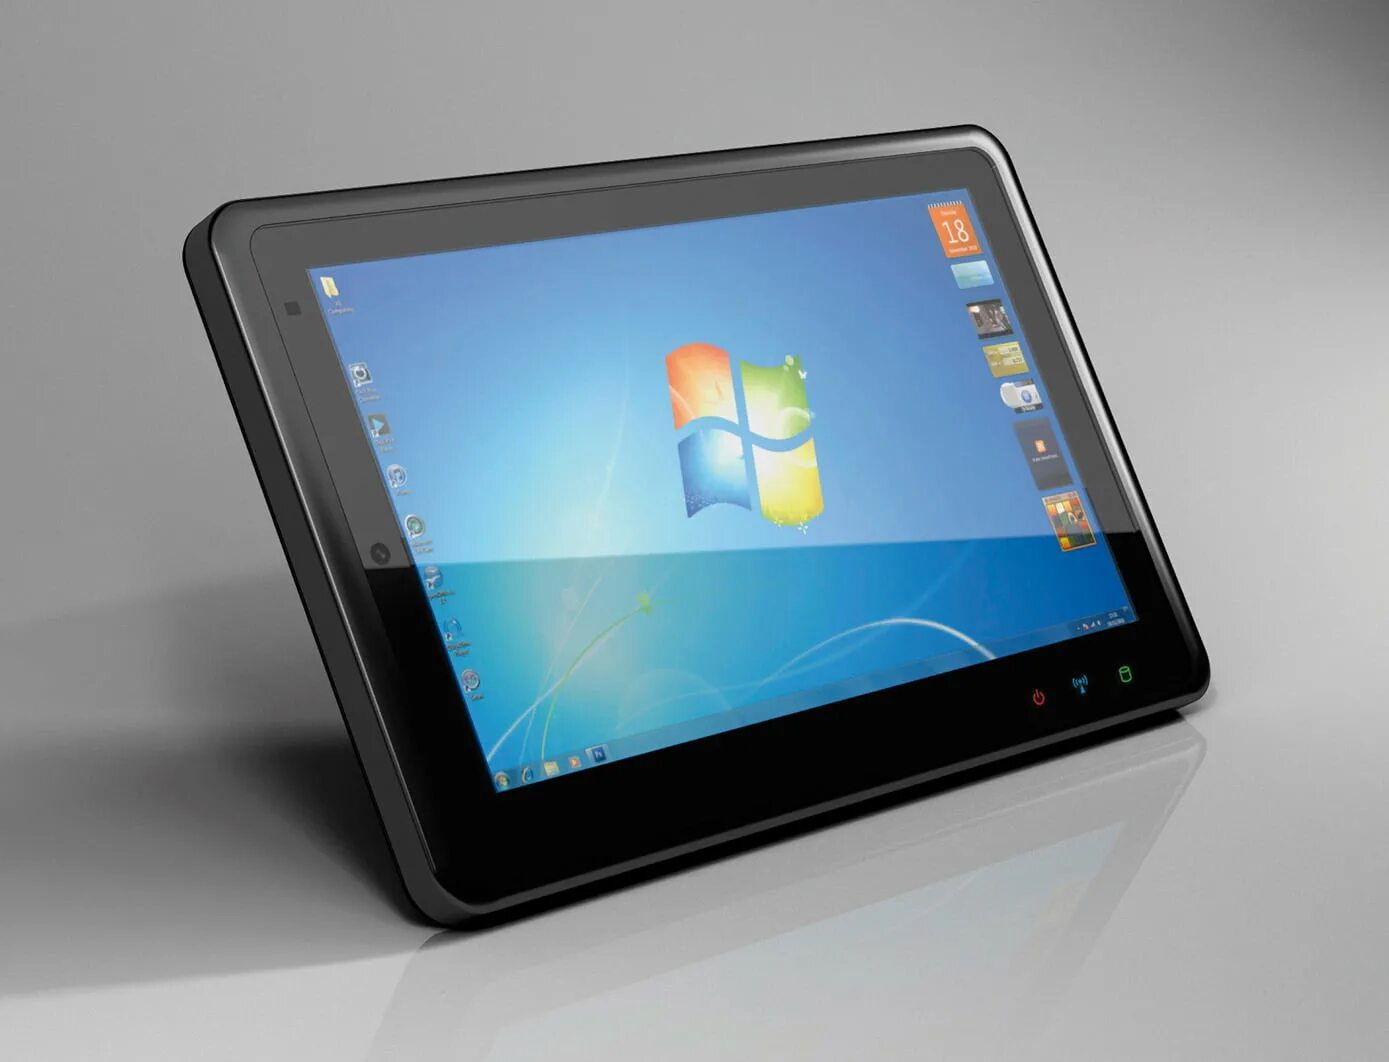 P40hd планшет. А105 Tablet PC планшет. Windows 7 Tablet PC. Tablet PC 2002. Майкрософт планшет виндовс 7.